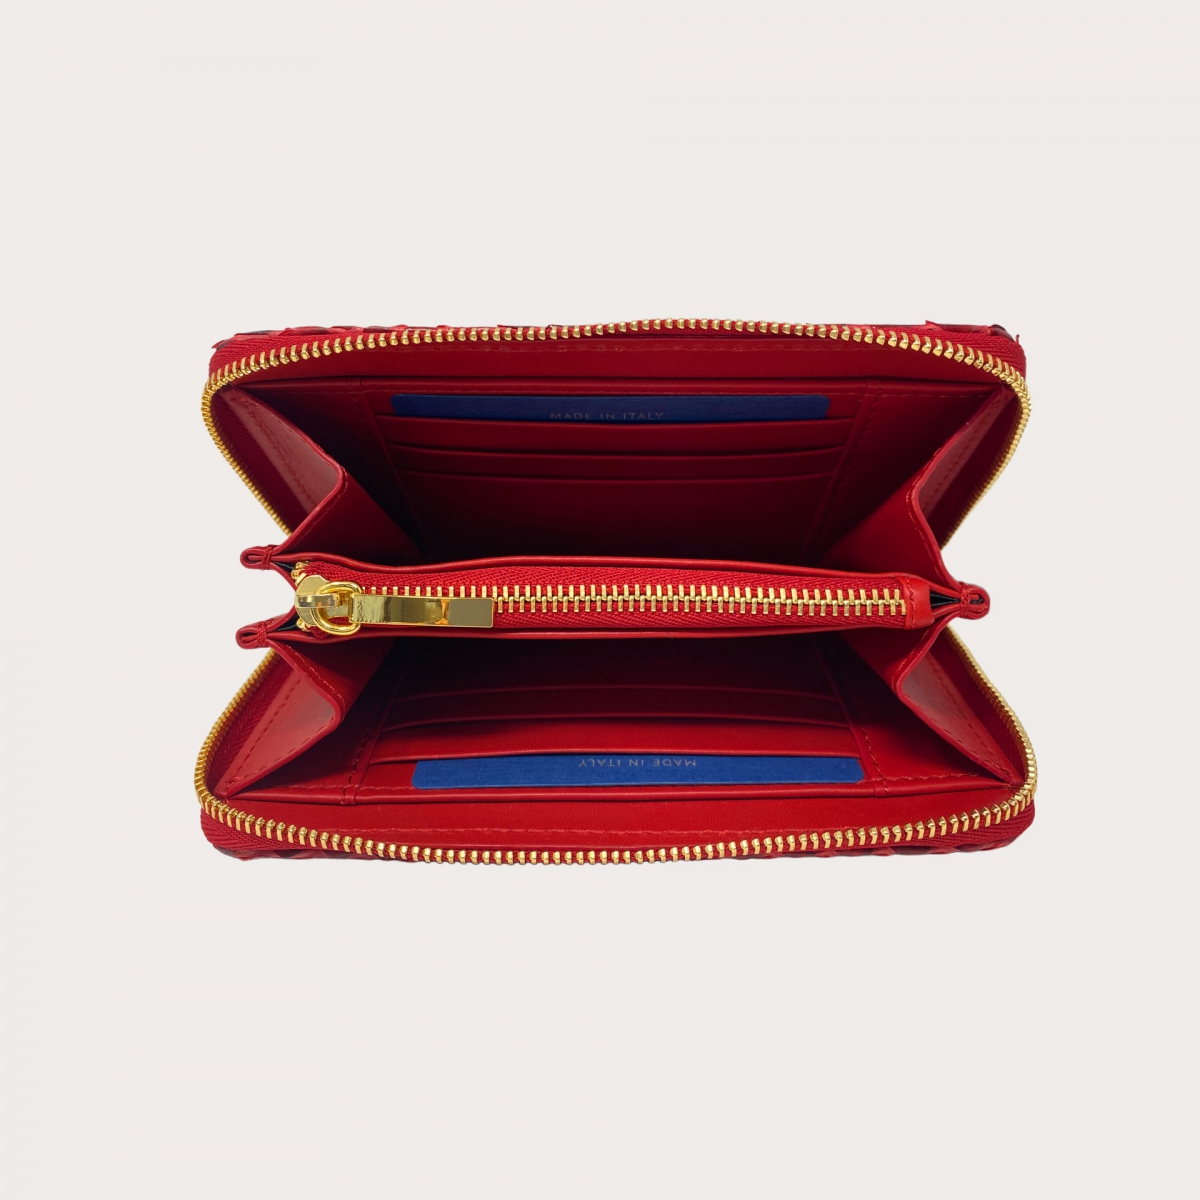 BRUCLE Kompakte Damengeldbörse aus Pythonleder, glänzend rot